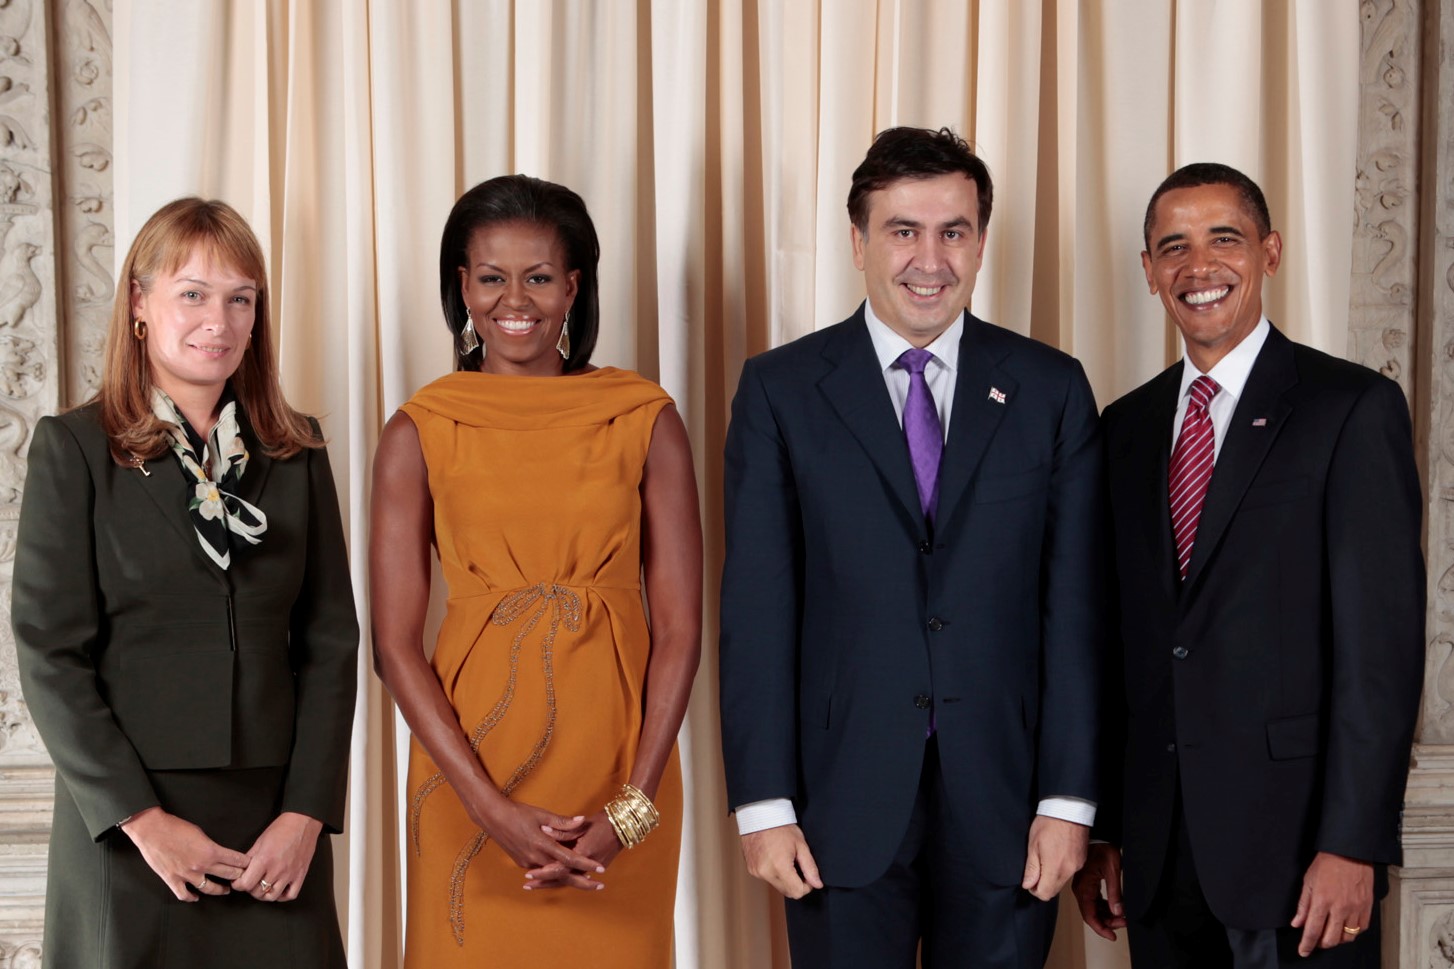 Mikheil Saakashvili with Obamas барак обама барак обама